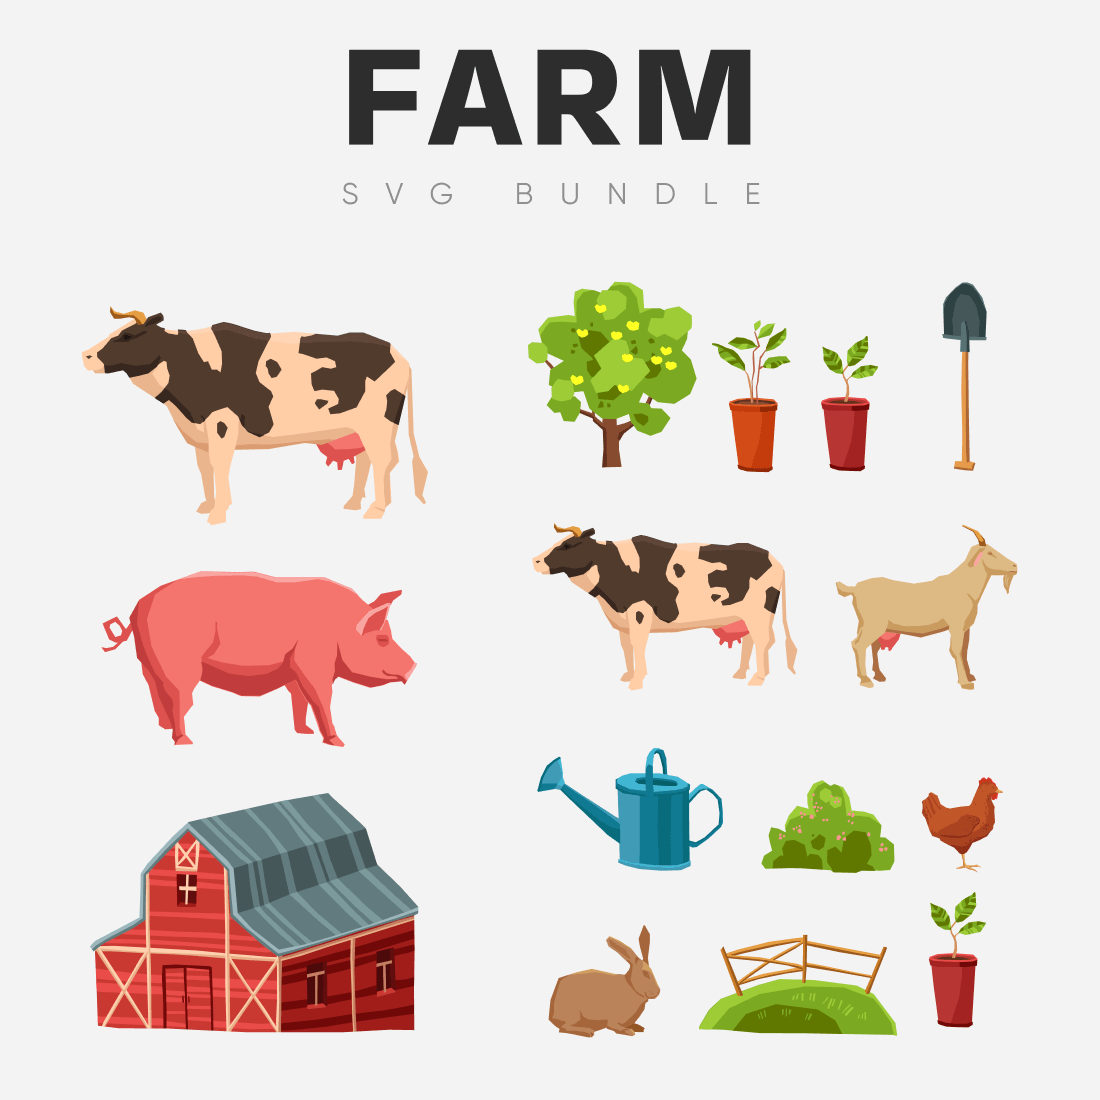 Farm SVG Bundle.